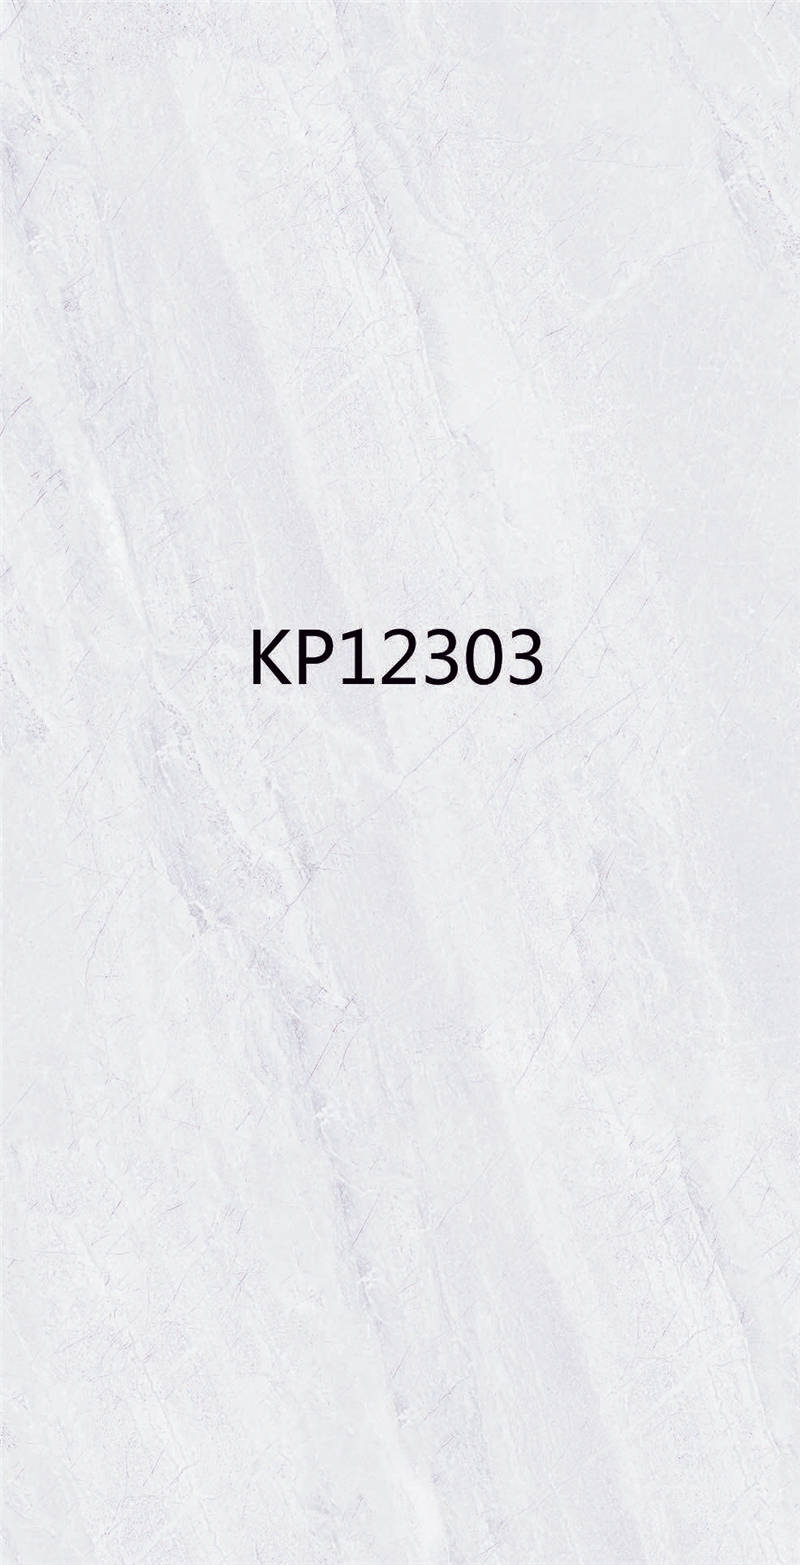 kp12303_兰帕德瓷砖隶属于广东佛山钰圣陶瓷有限公司旗下品牌官方网站